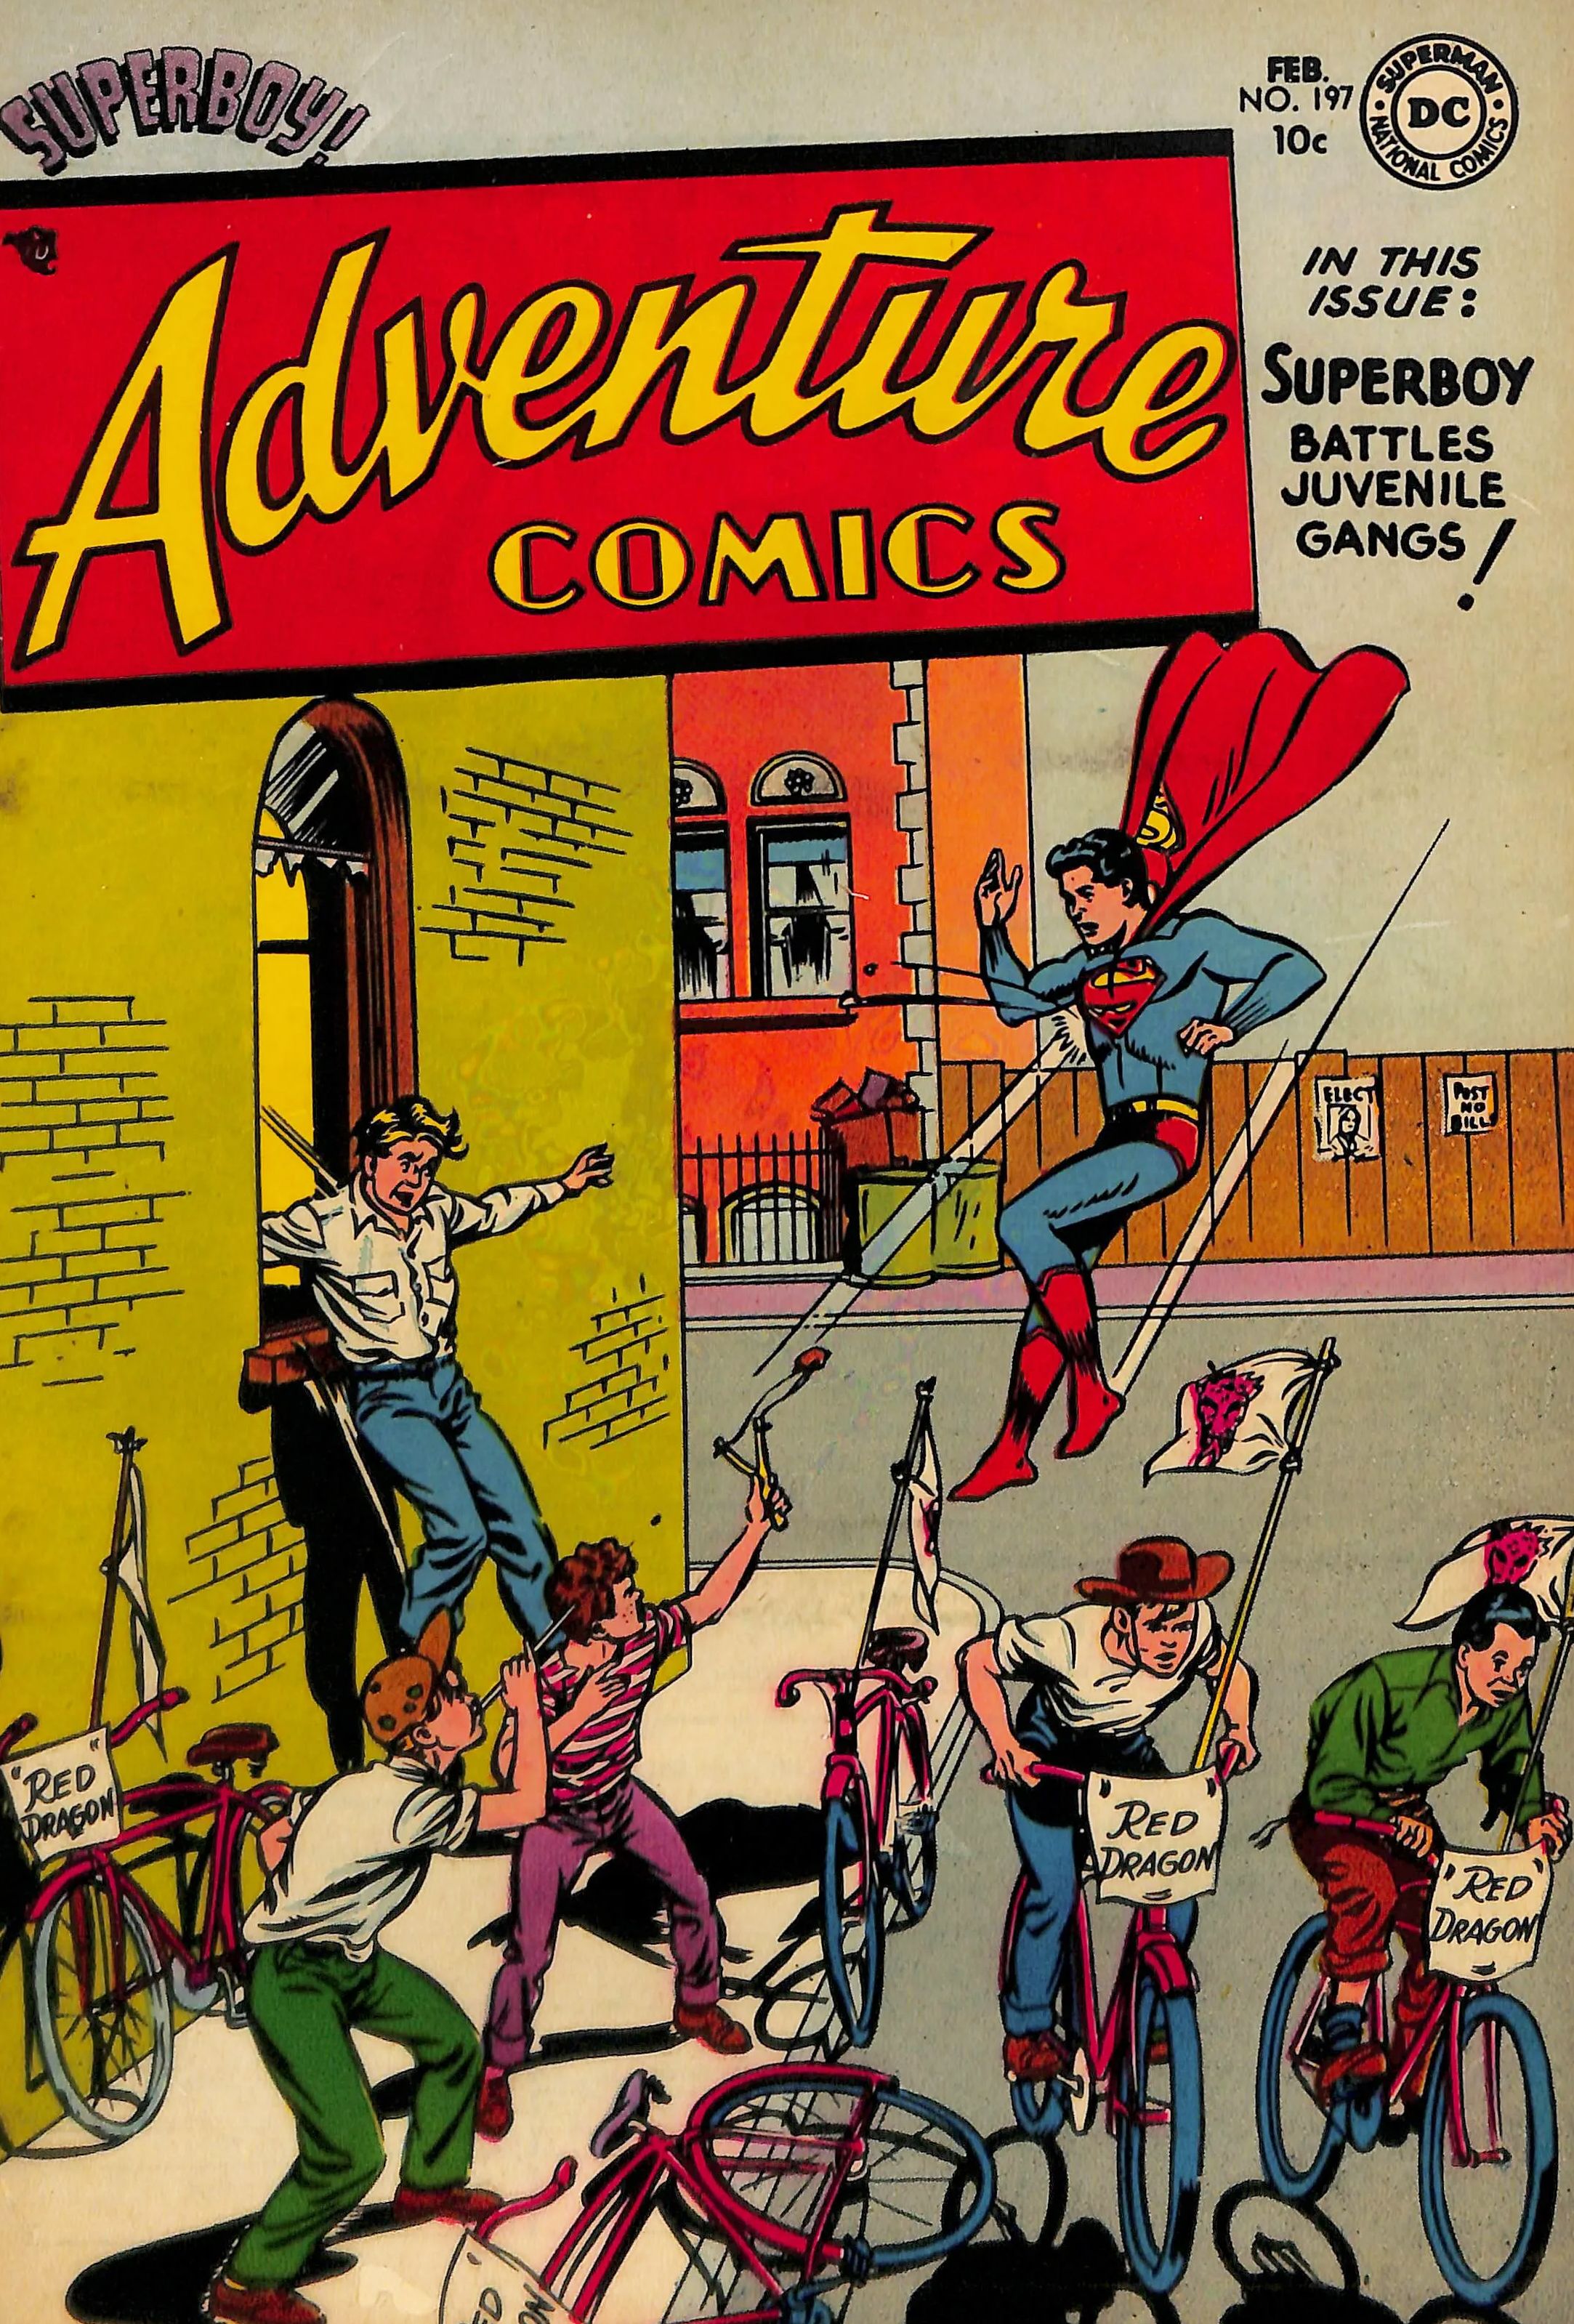 Adventure Comics #197 Comic